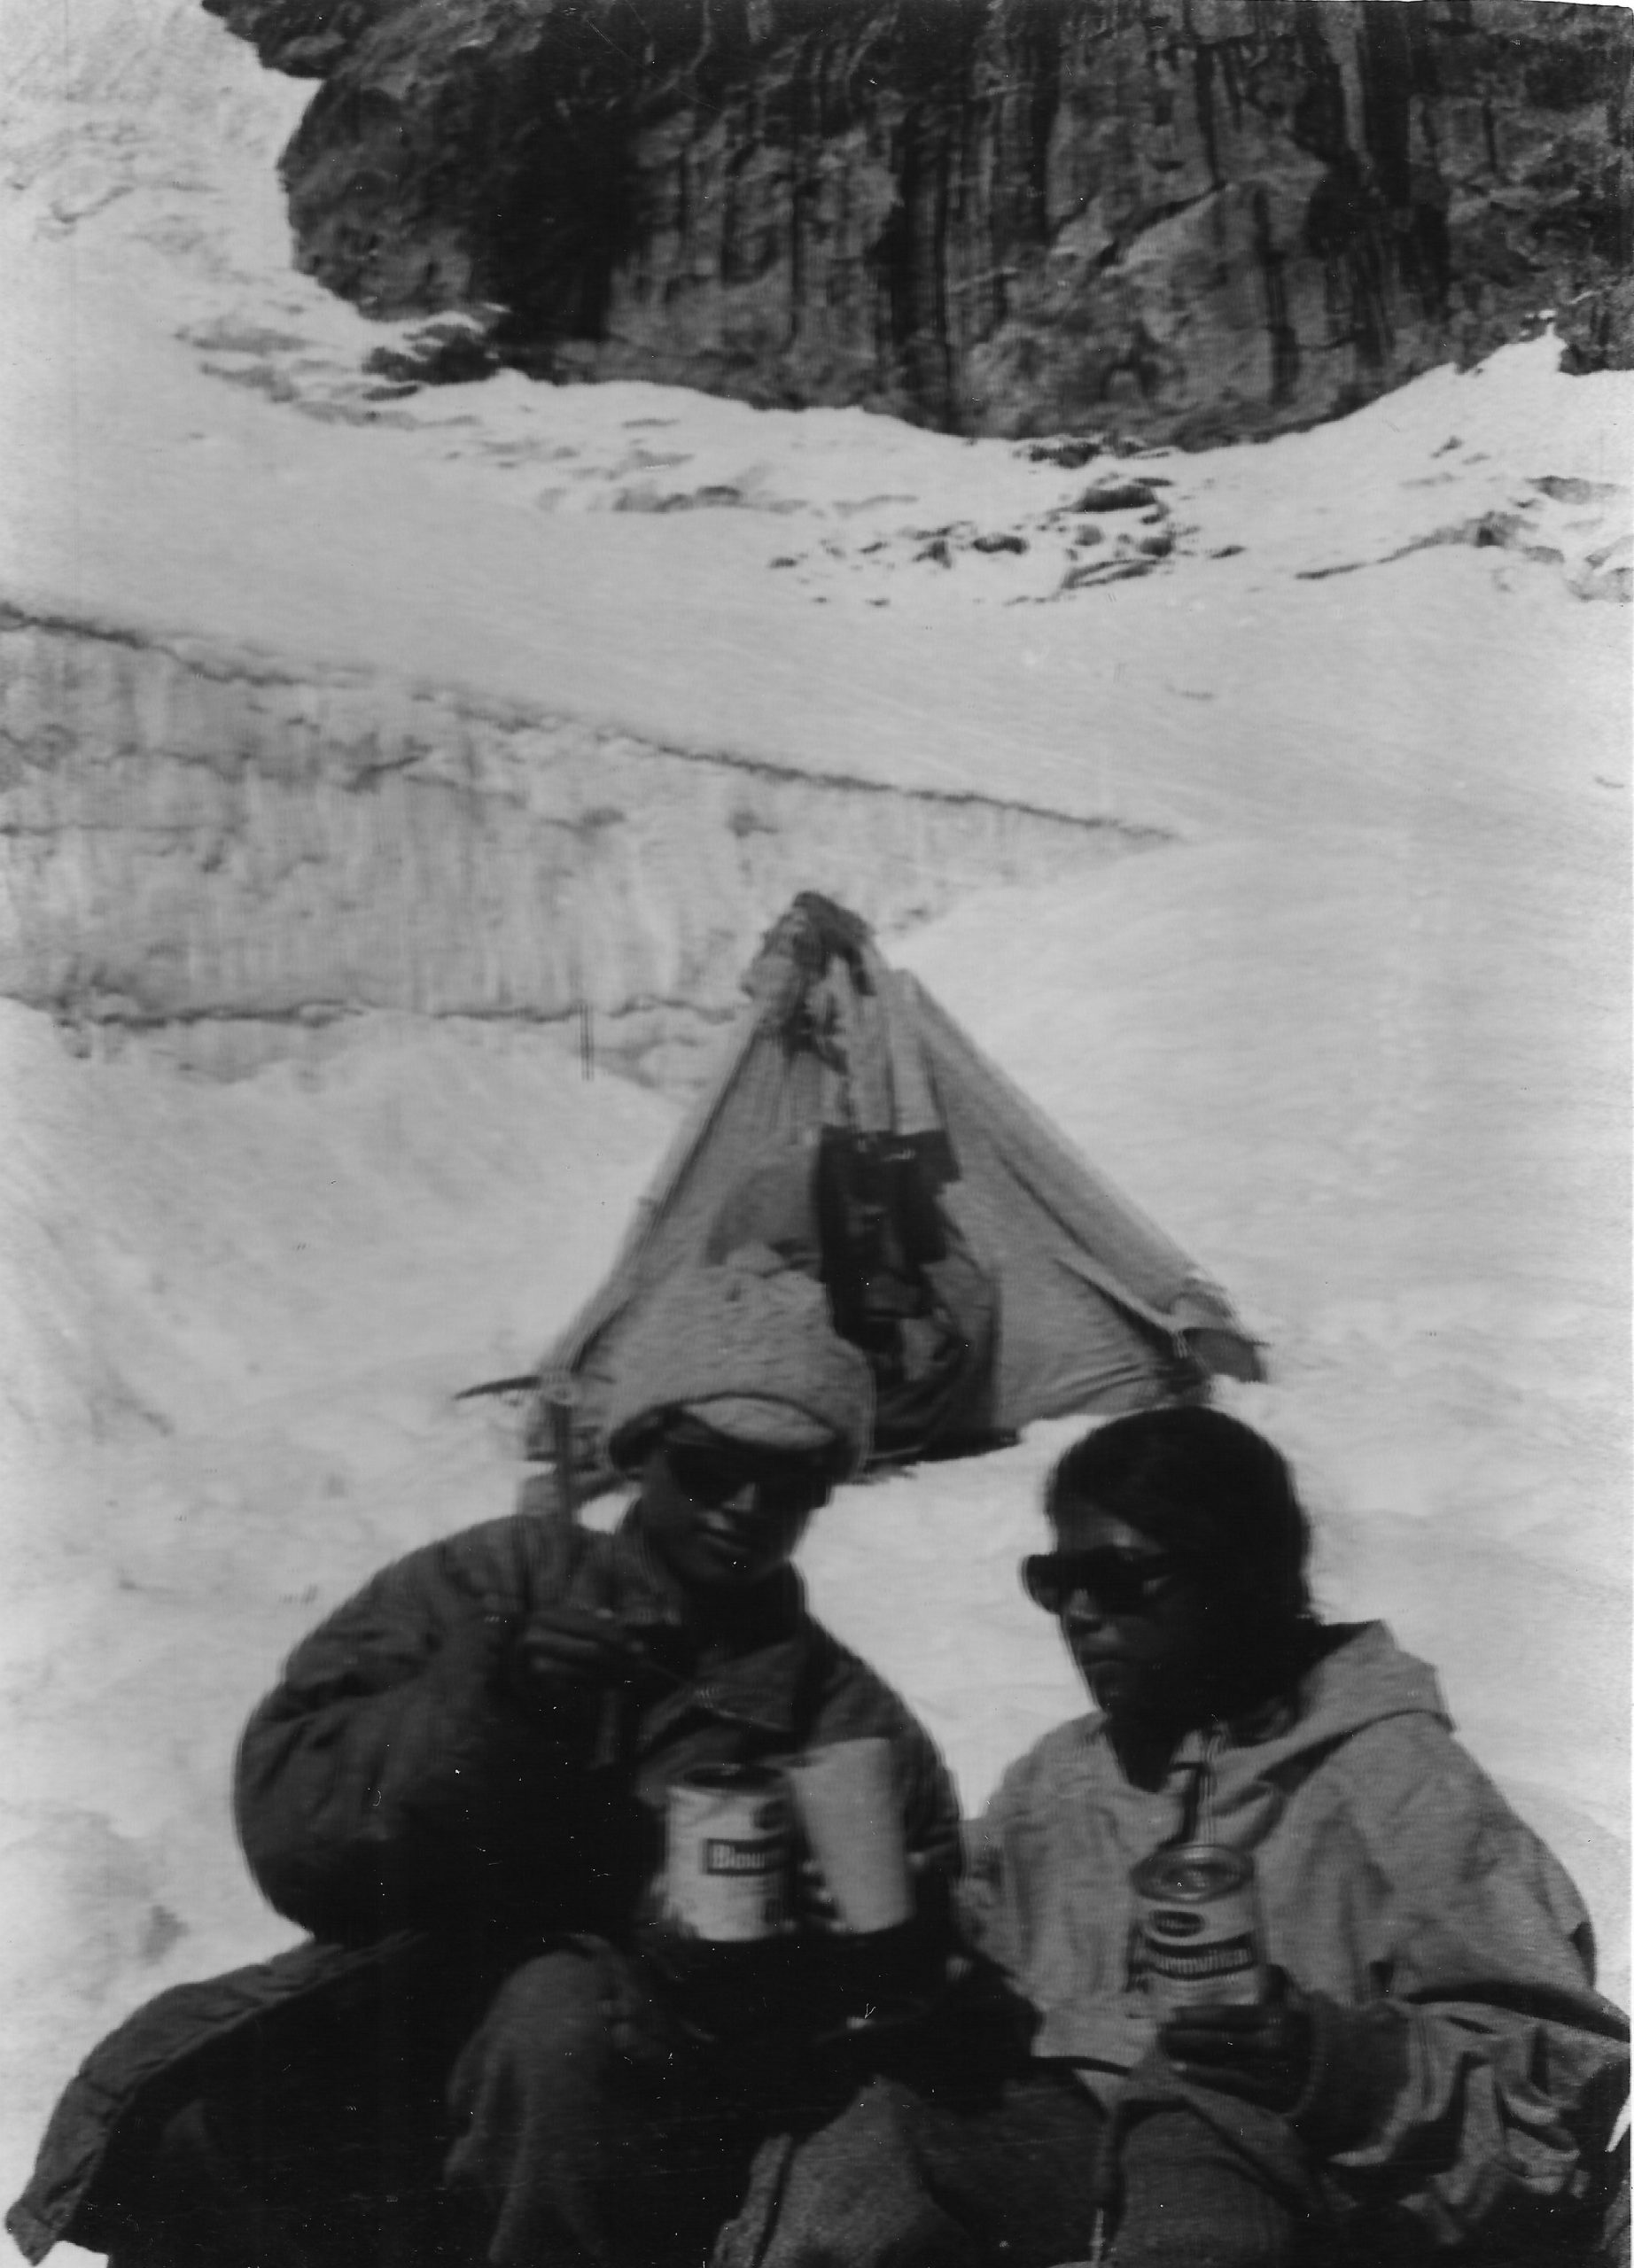 Enjoying tea at camp III, 18,000 feet, with Kamala (left) and Sudipta (right) [image by: Sudipta Sengupta]